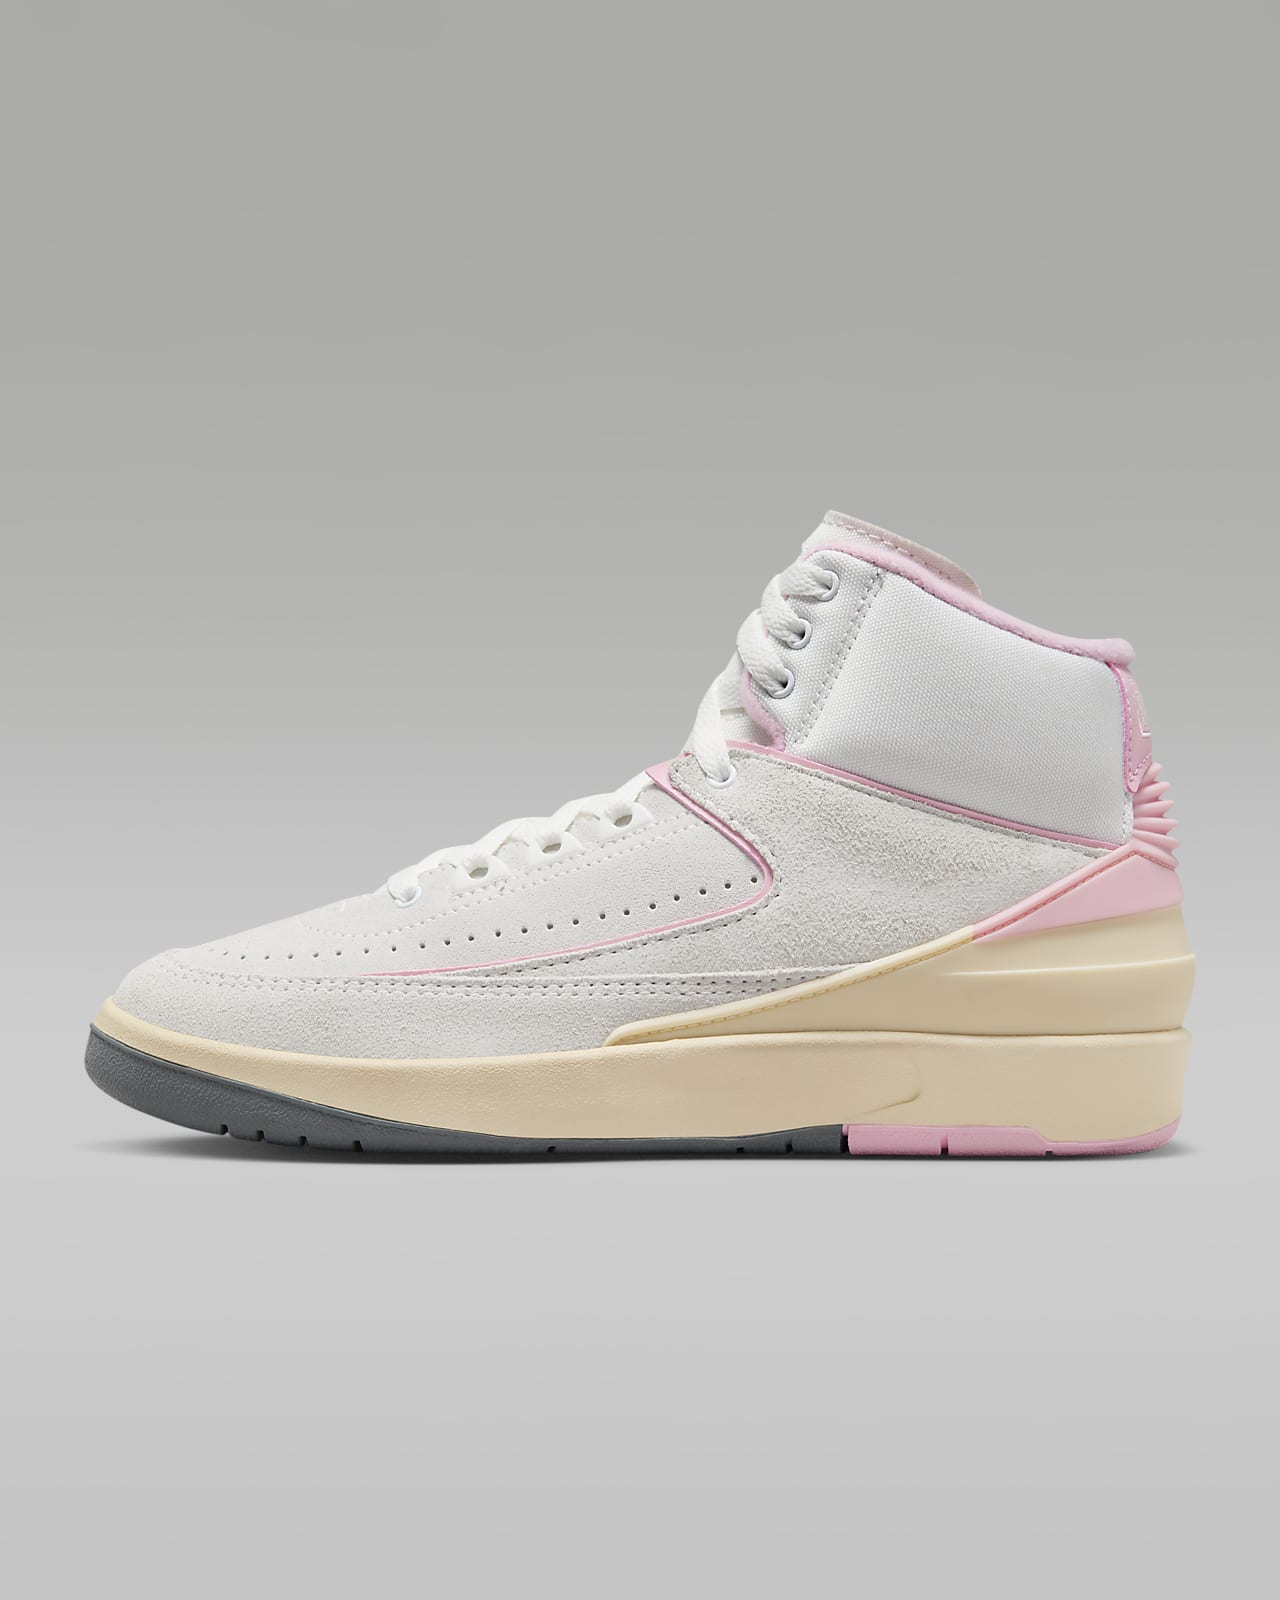 SNEAKER CONCEPTS: Air Jordan 4 “Soft Pink” 💕